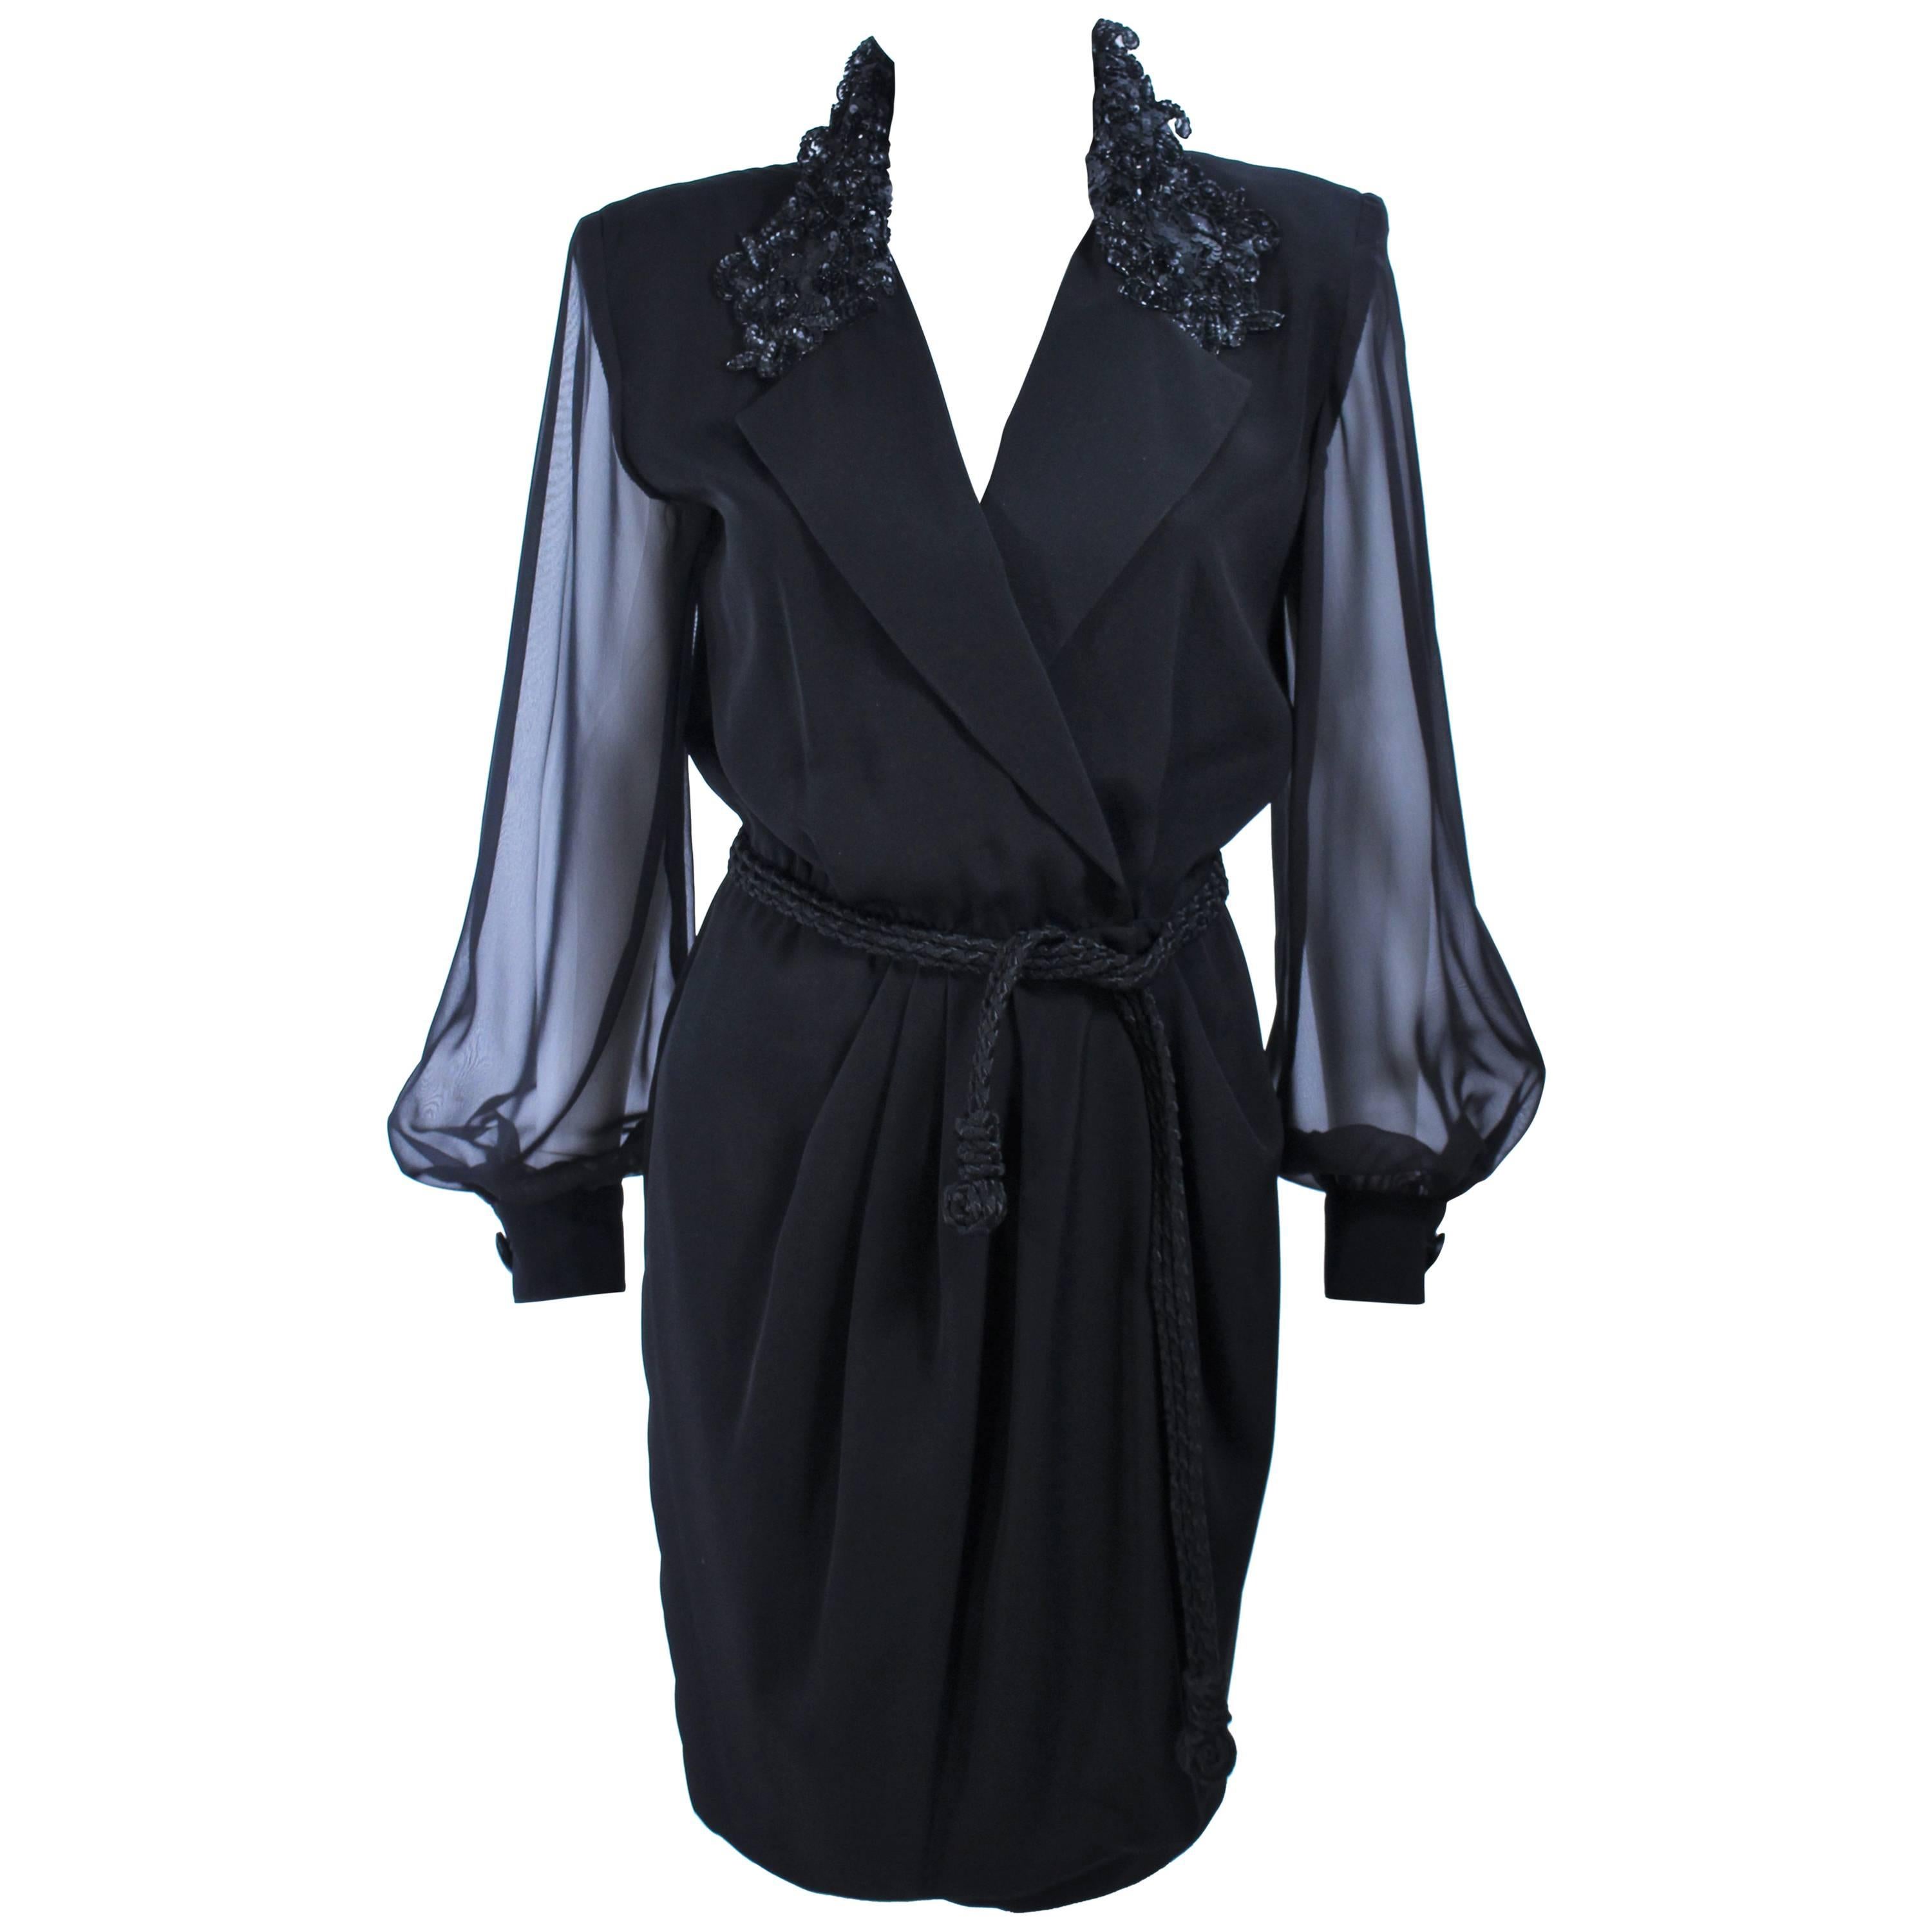 LIAN CARLO Black Sequin Chiffon Sheer Sleeve Cocktail Dress Size 8 For Sale